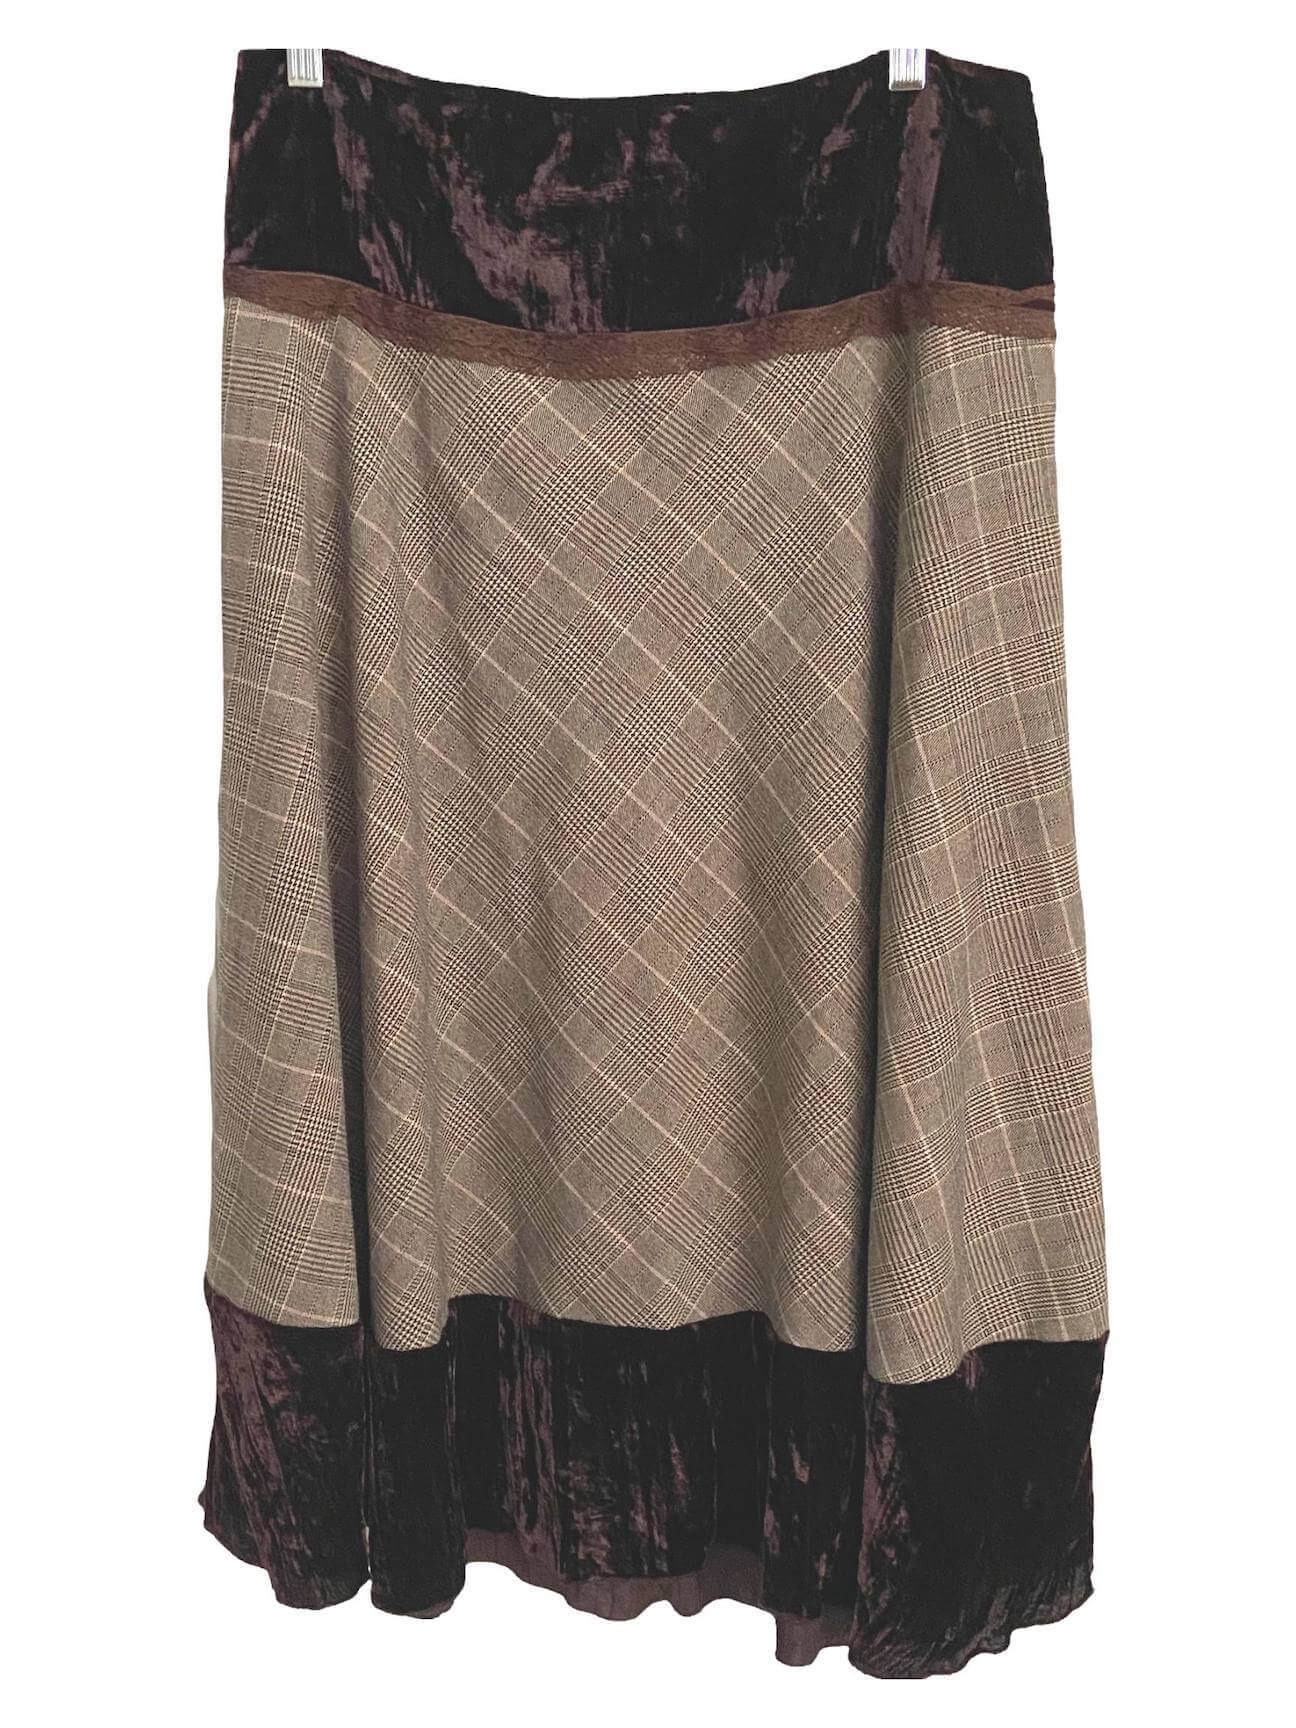 Soft Autumn Plaid Velvet and Lace Skirt